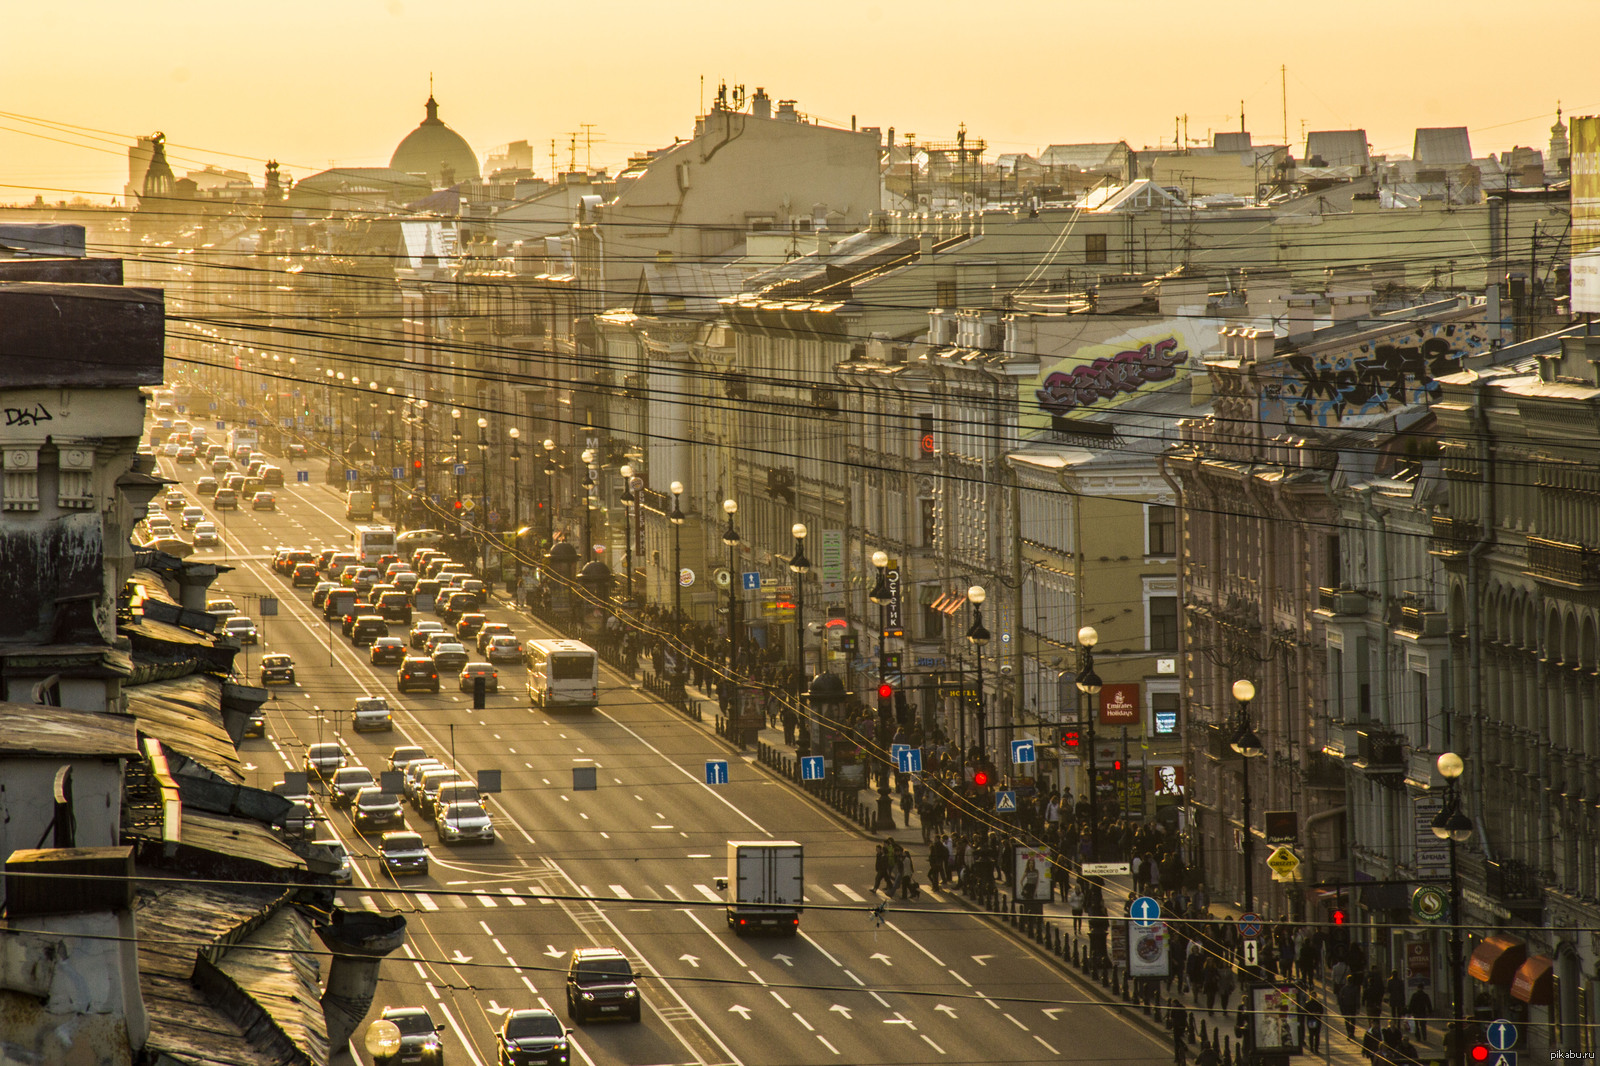 Знаменитые улицы петербурга